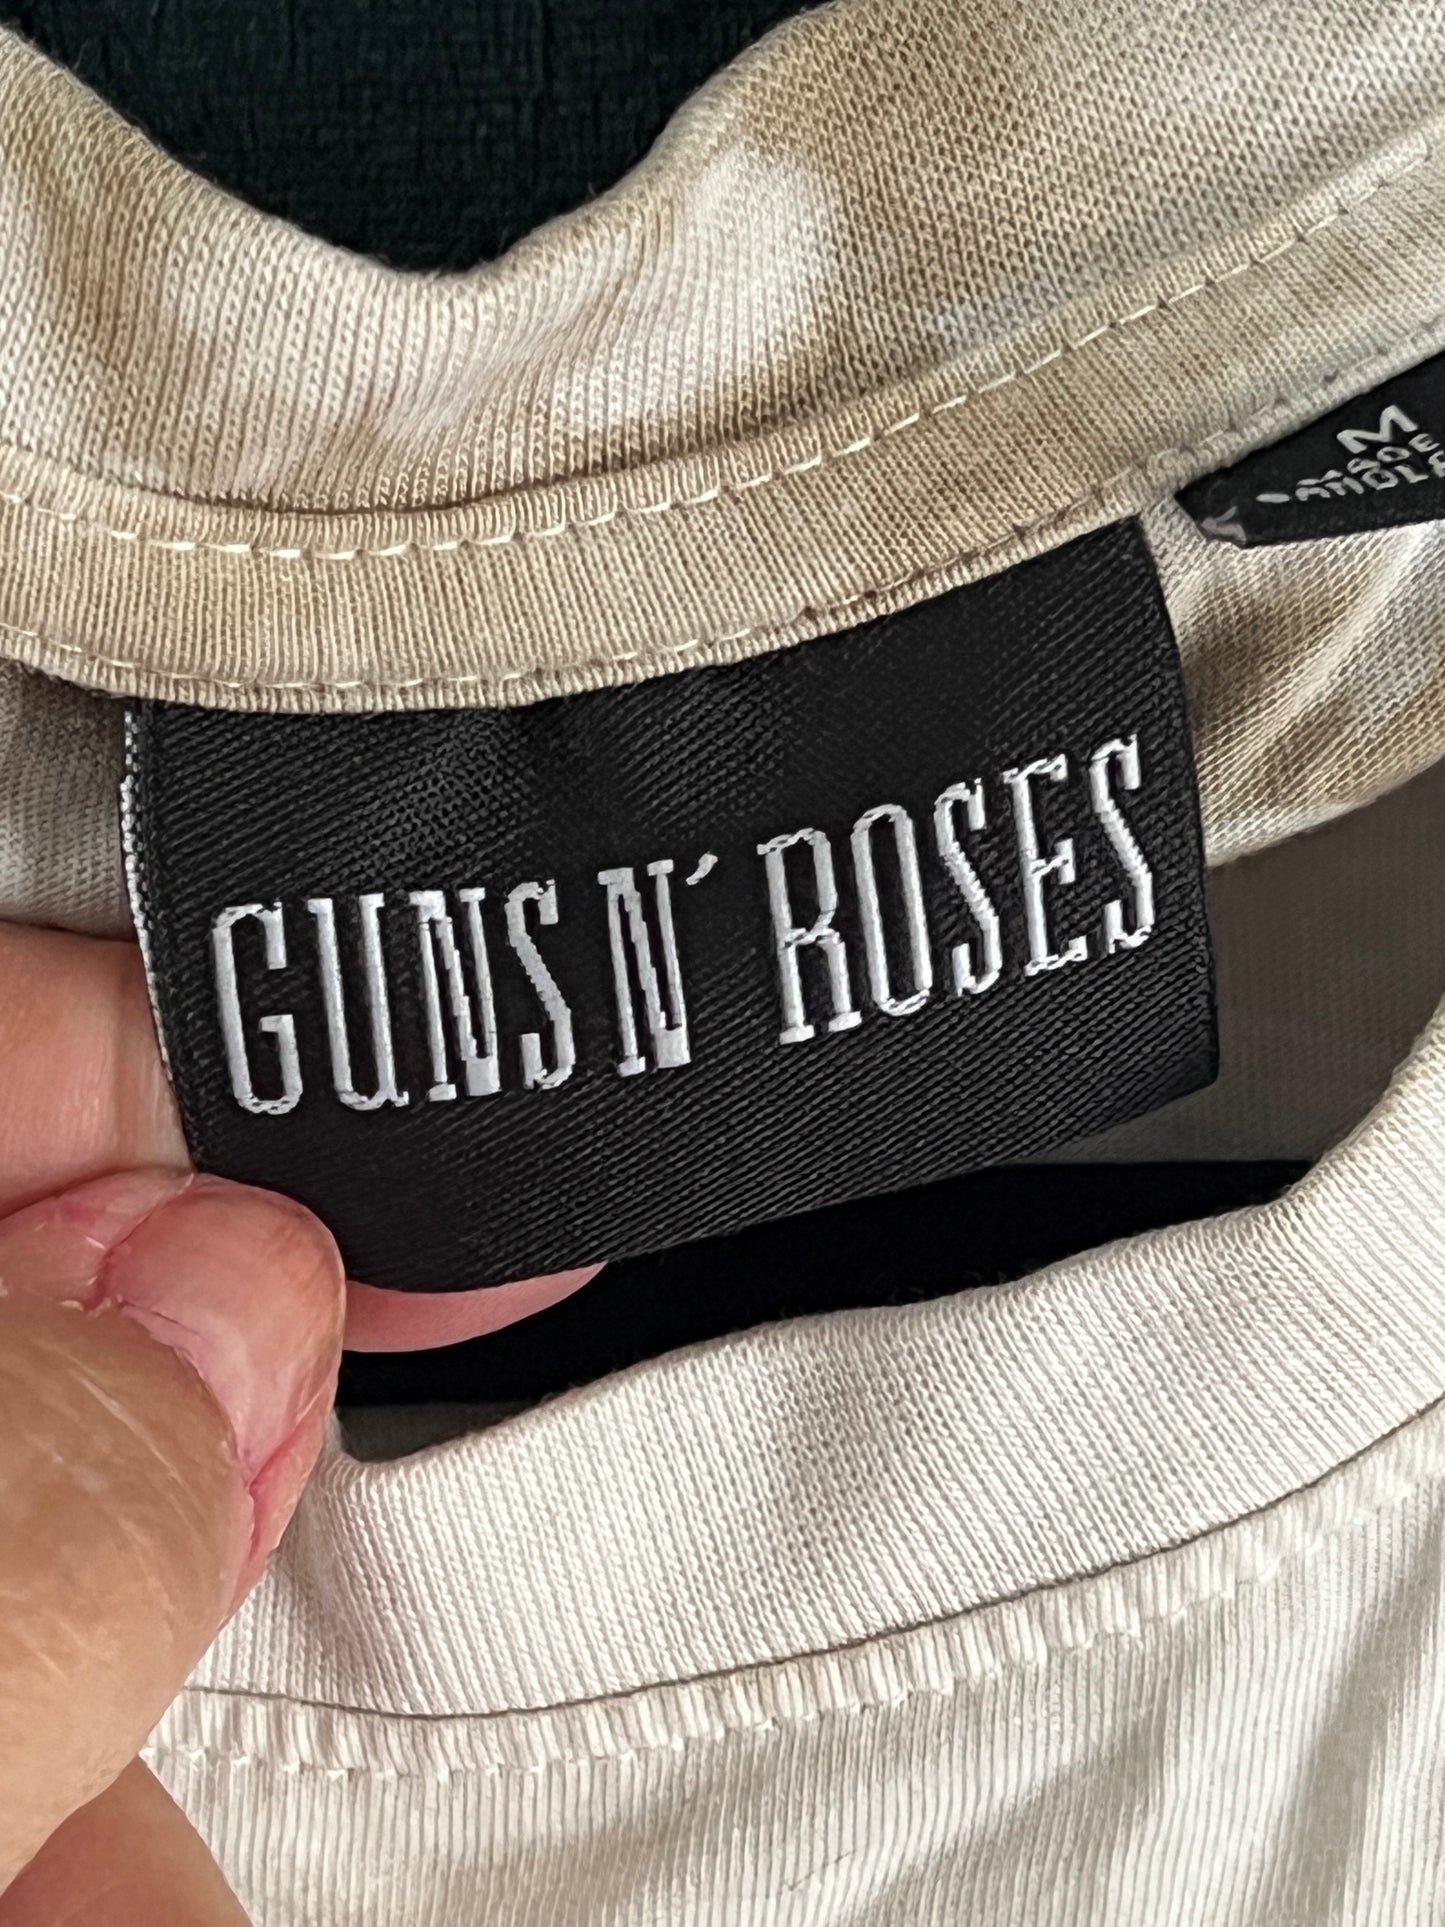 Guns n Roses tie dye festival style rock band t shirt vest